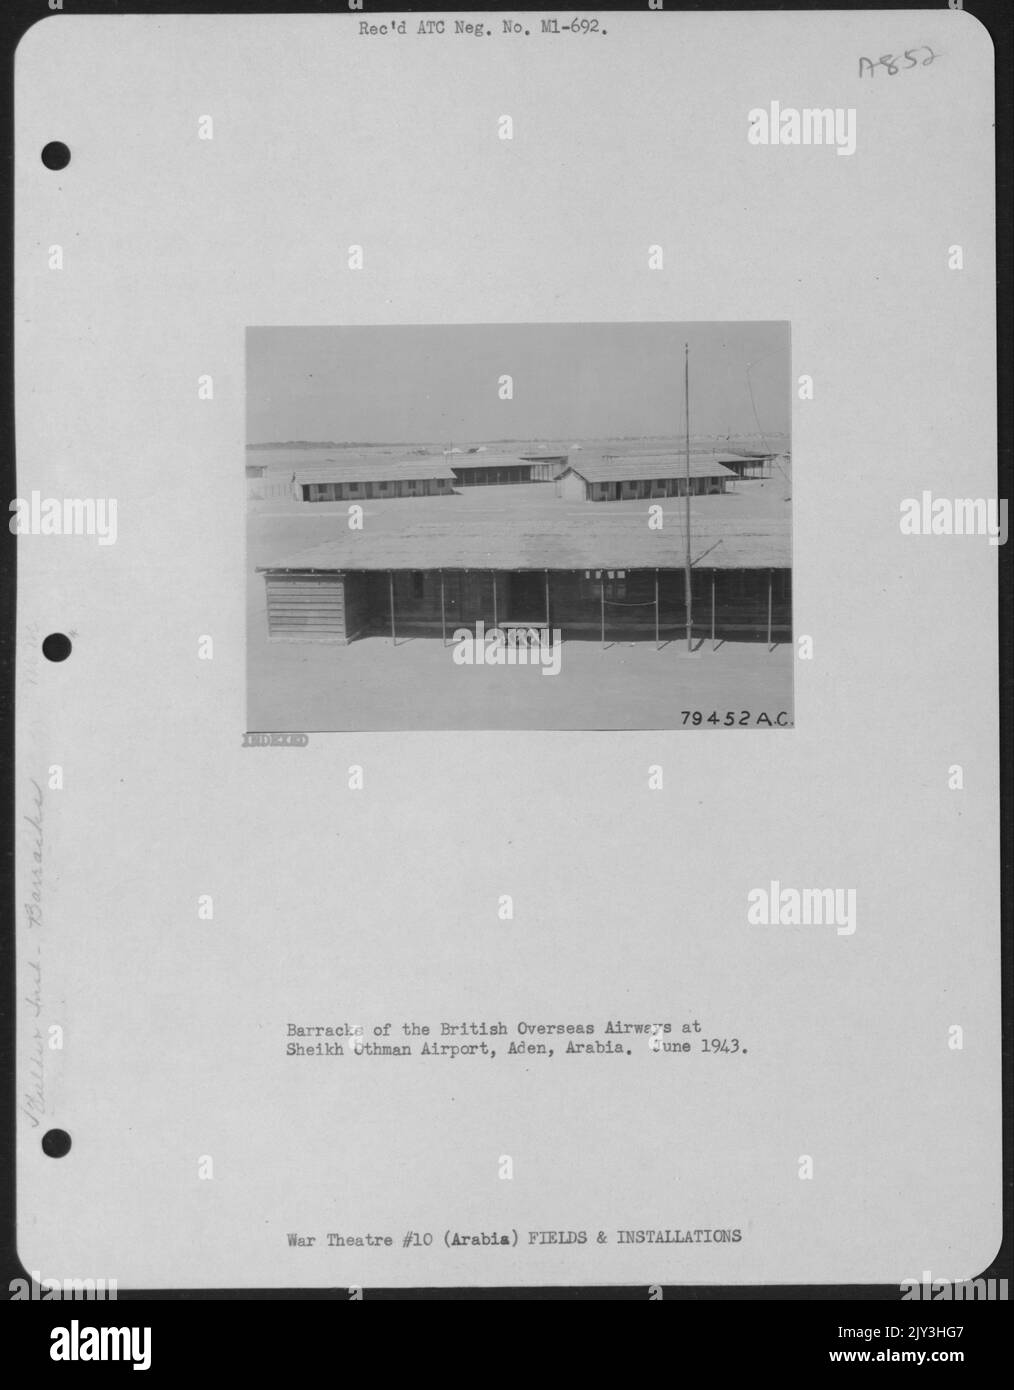 Barracks Of The British Overseas Airways At Sheikh Othman Airport, Aden, Arabia. June 1943. Stock Photo